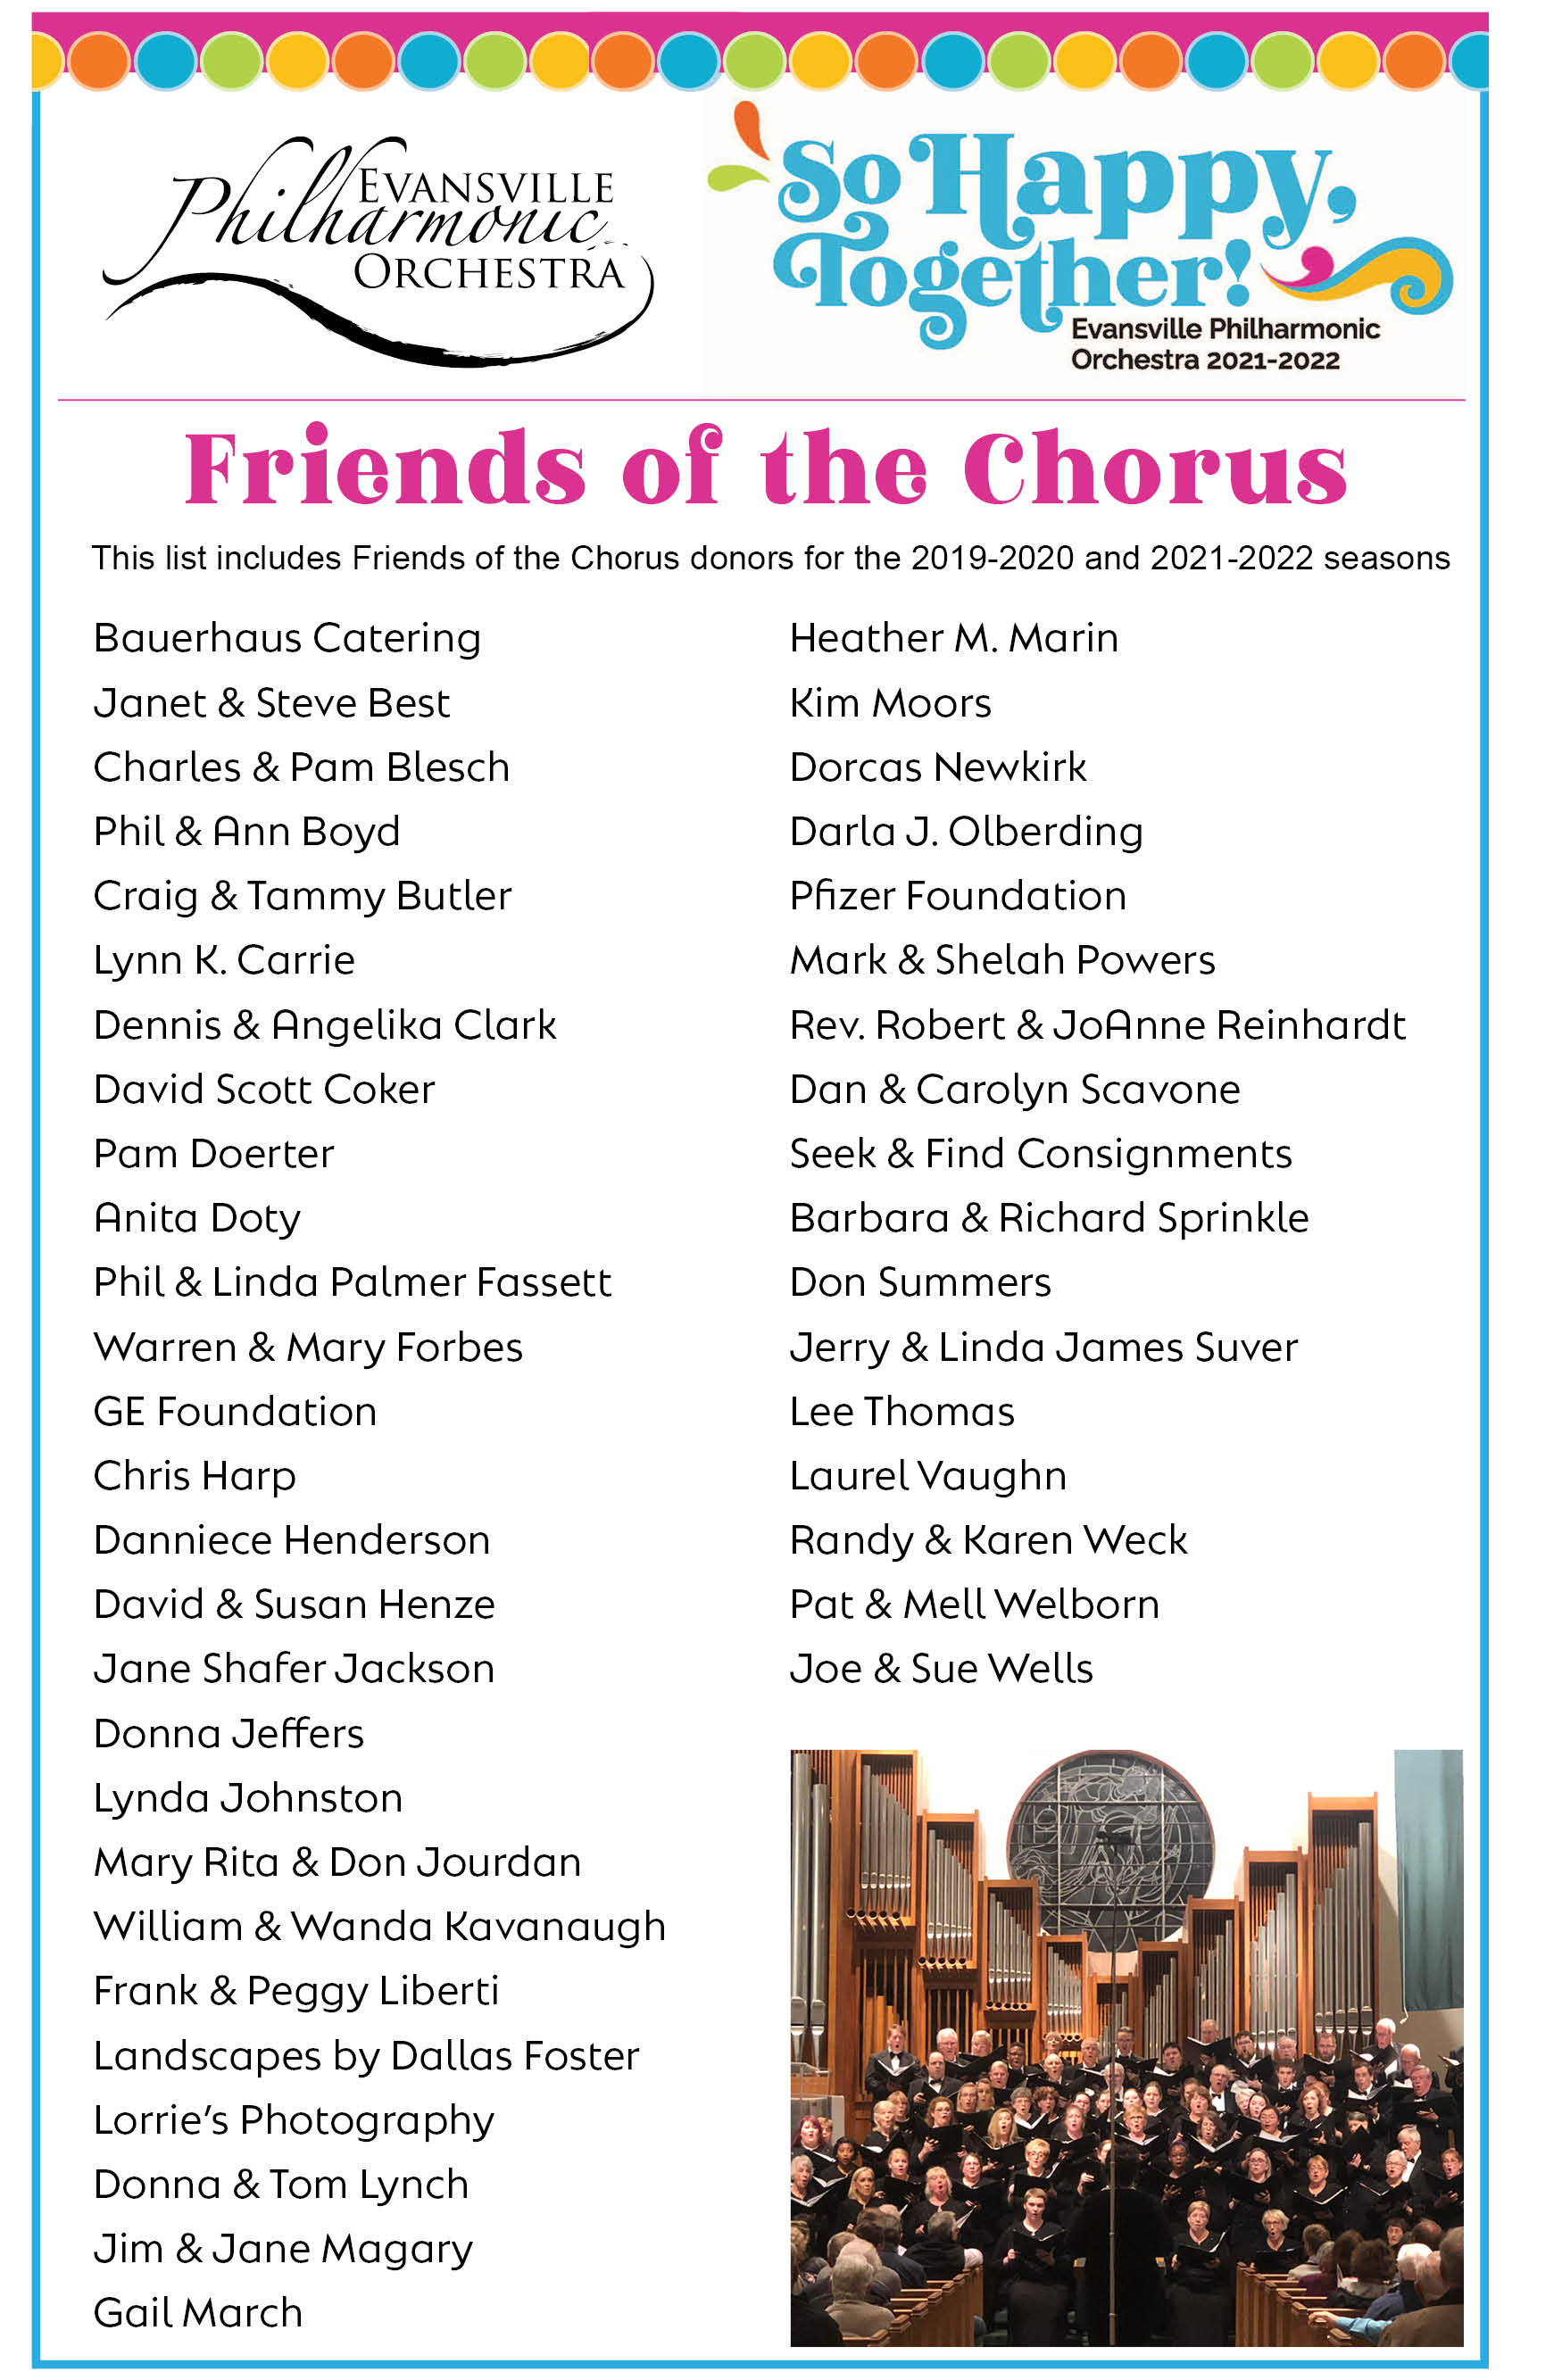 Friends of Chorus